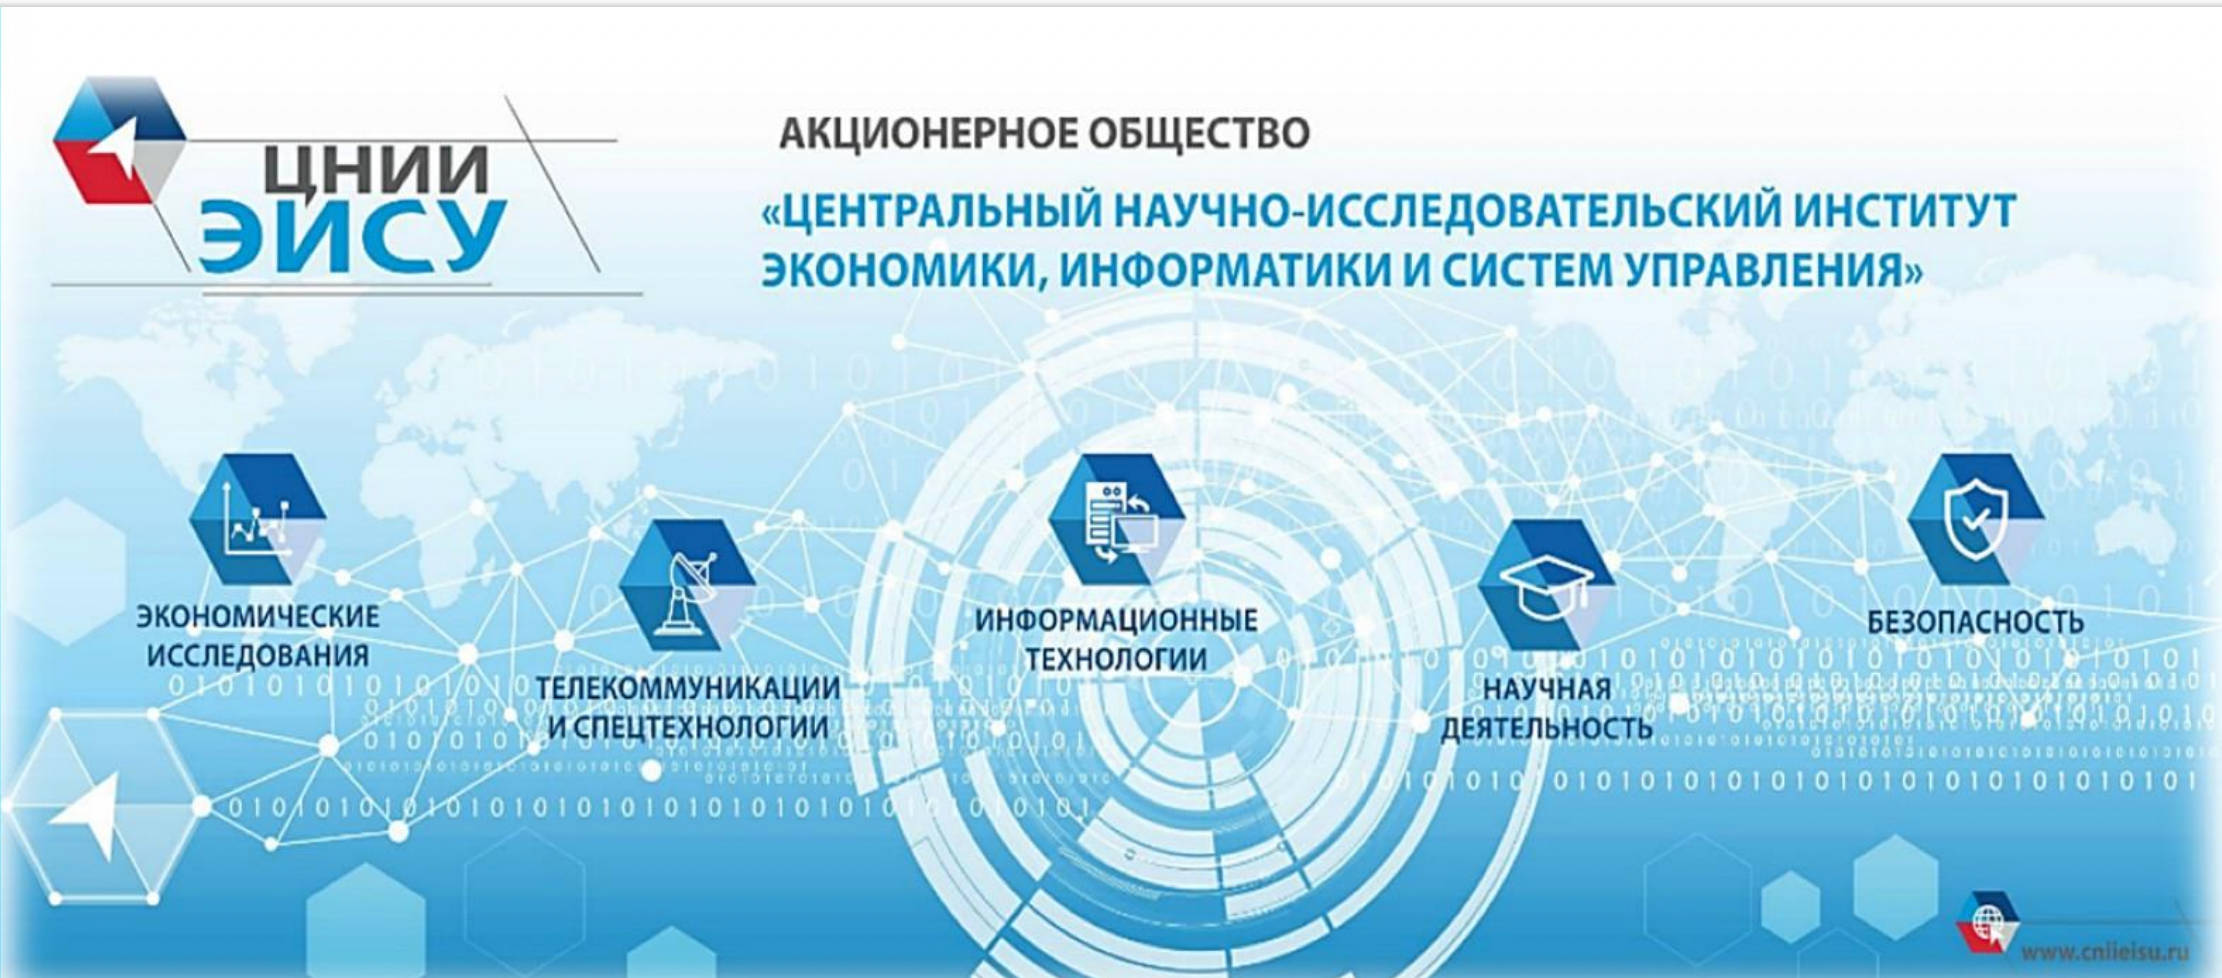 Central Research Institute of EISU declared bankrupt - ВПК.name